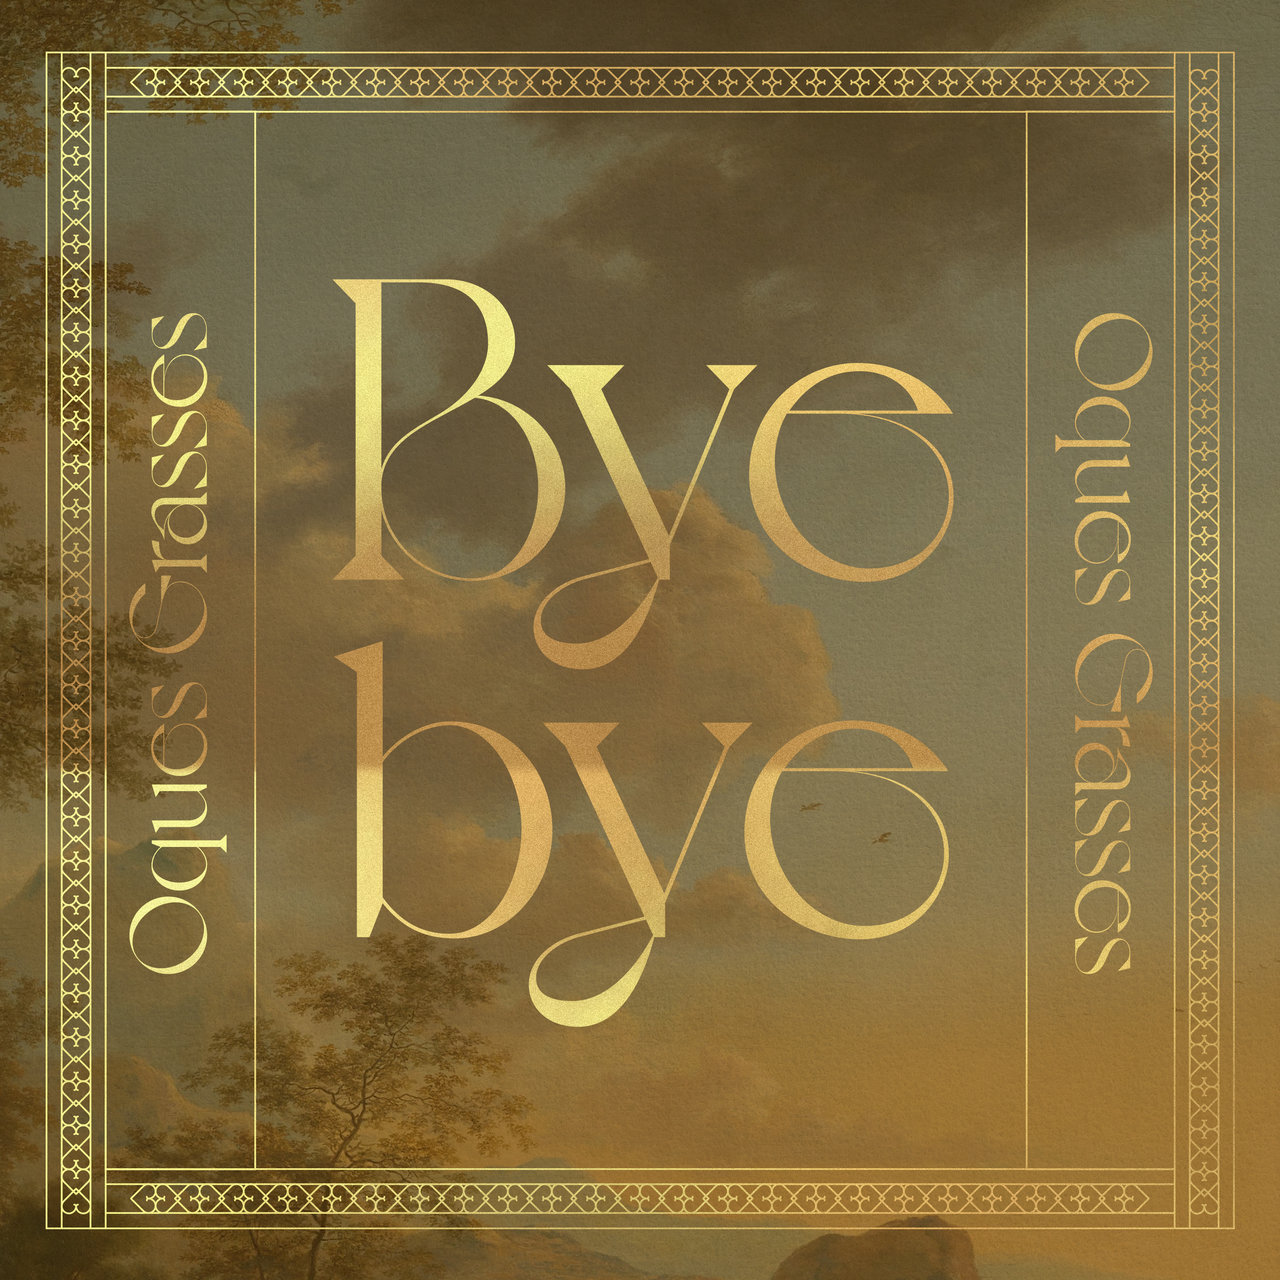 Oques Grasses — Bye Bye cover artwork